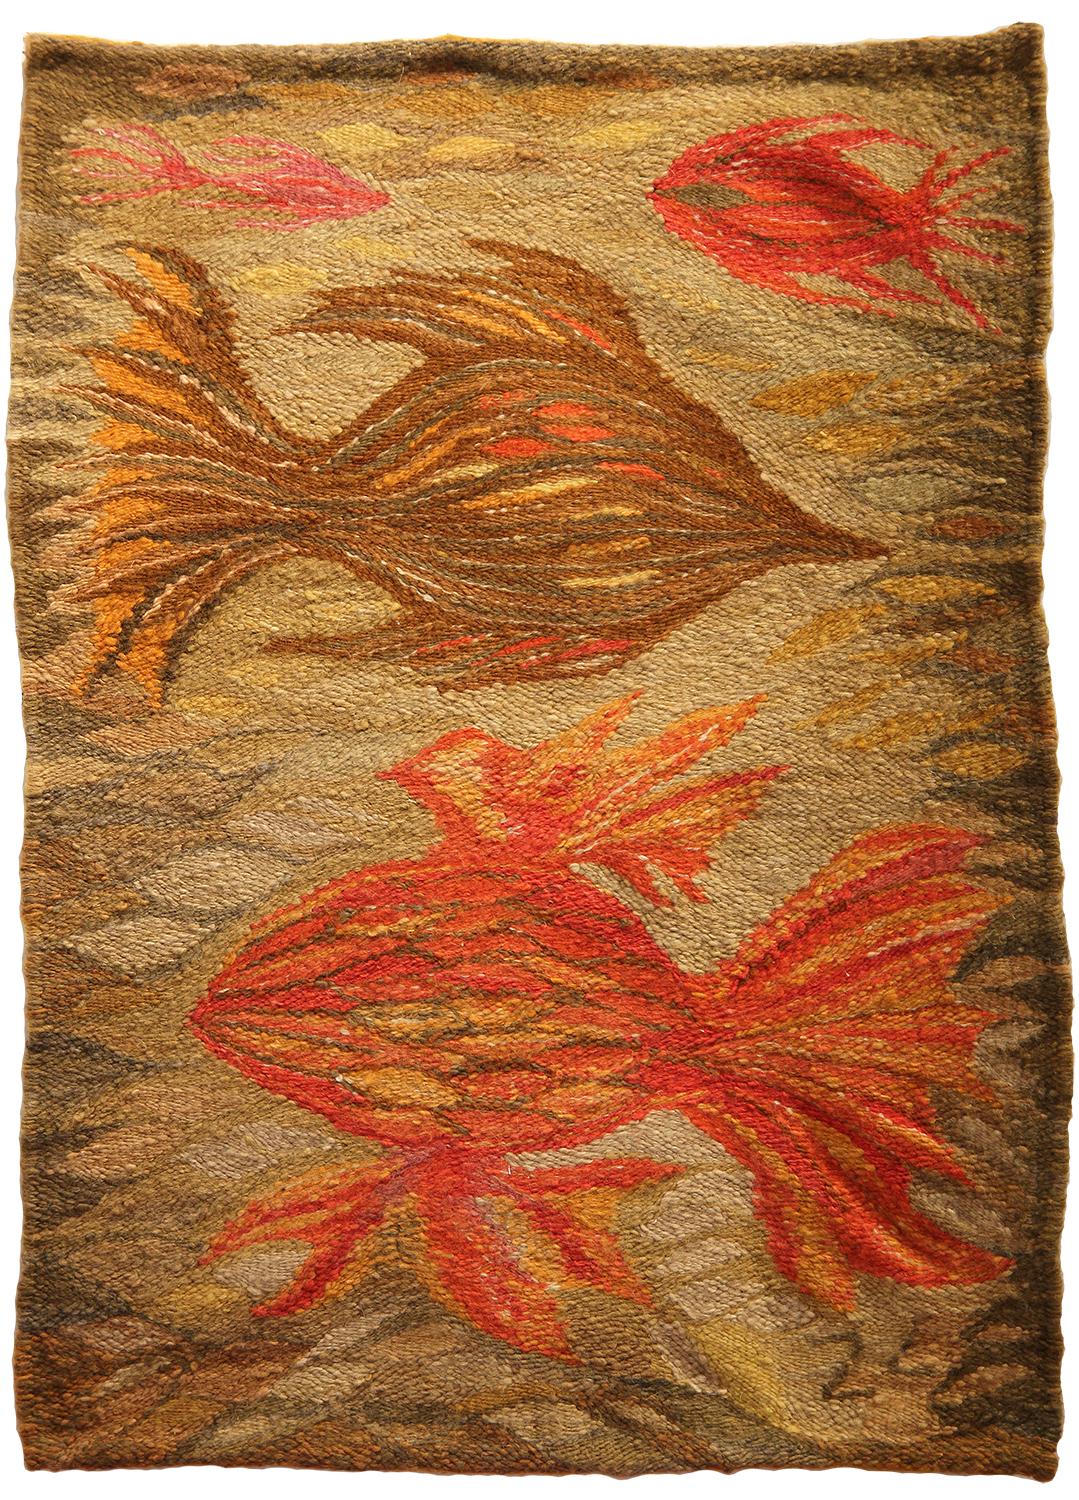 "Ryby W Sieci" Orange and Red Toned Abstract Fishes Gobelin Polski Tapestry - Art by Zofia Litak